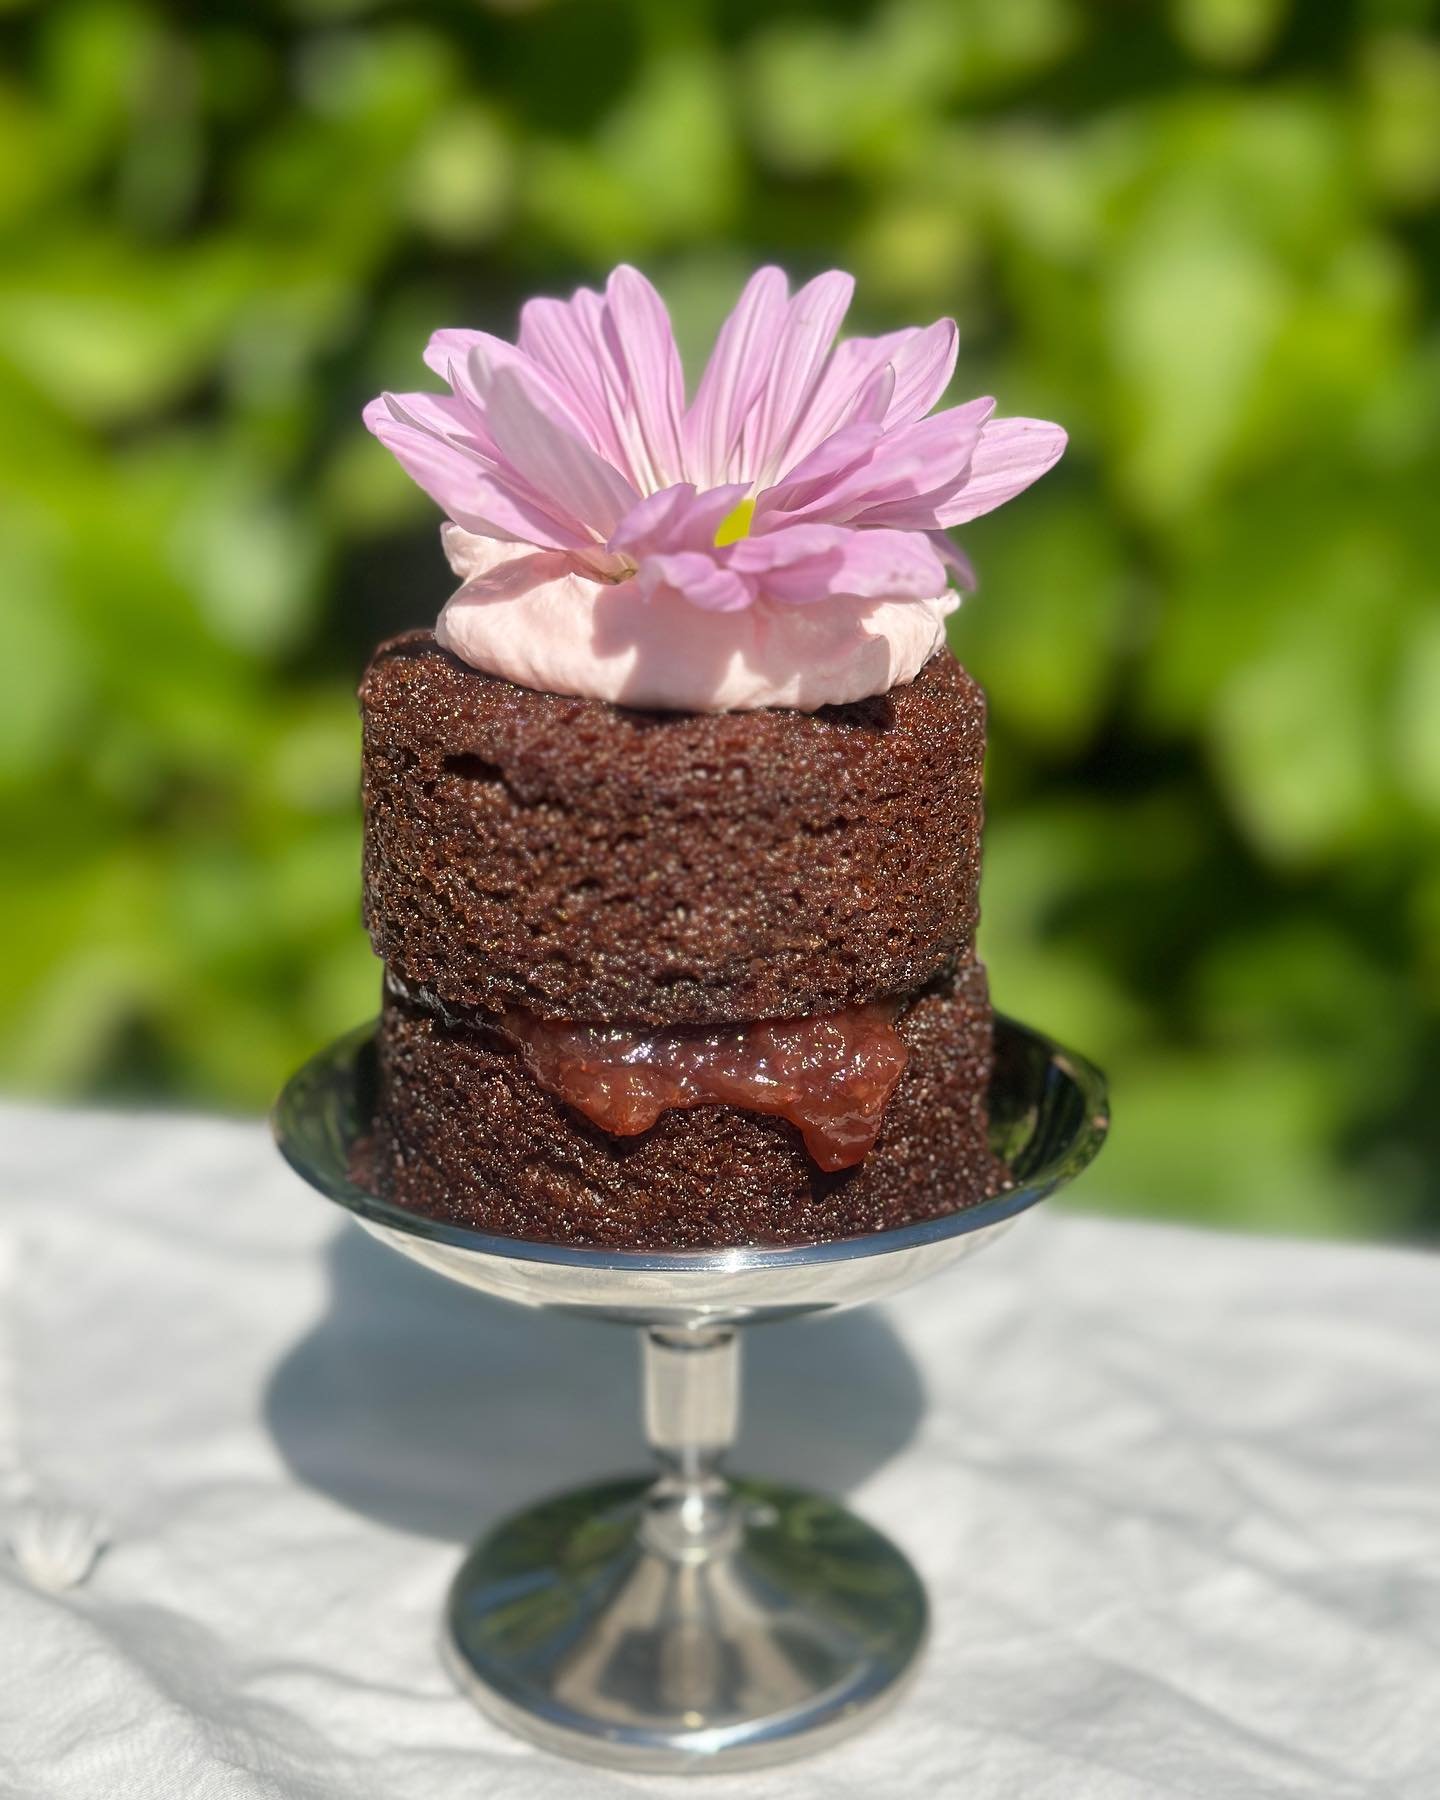 Welcome the 3 specials for this weekend 
Saturday &amp; Sunday

Chocolate strawberry cake 
GF hazelnut raspberry cake 
Rhubarb vanilla cream roll

#vegan #plantbased #flowers